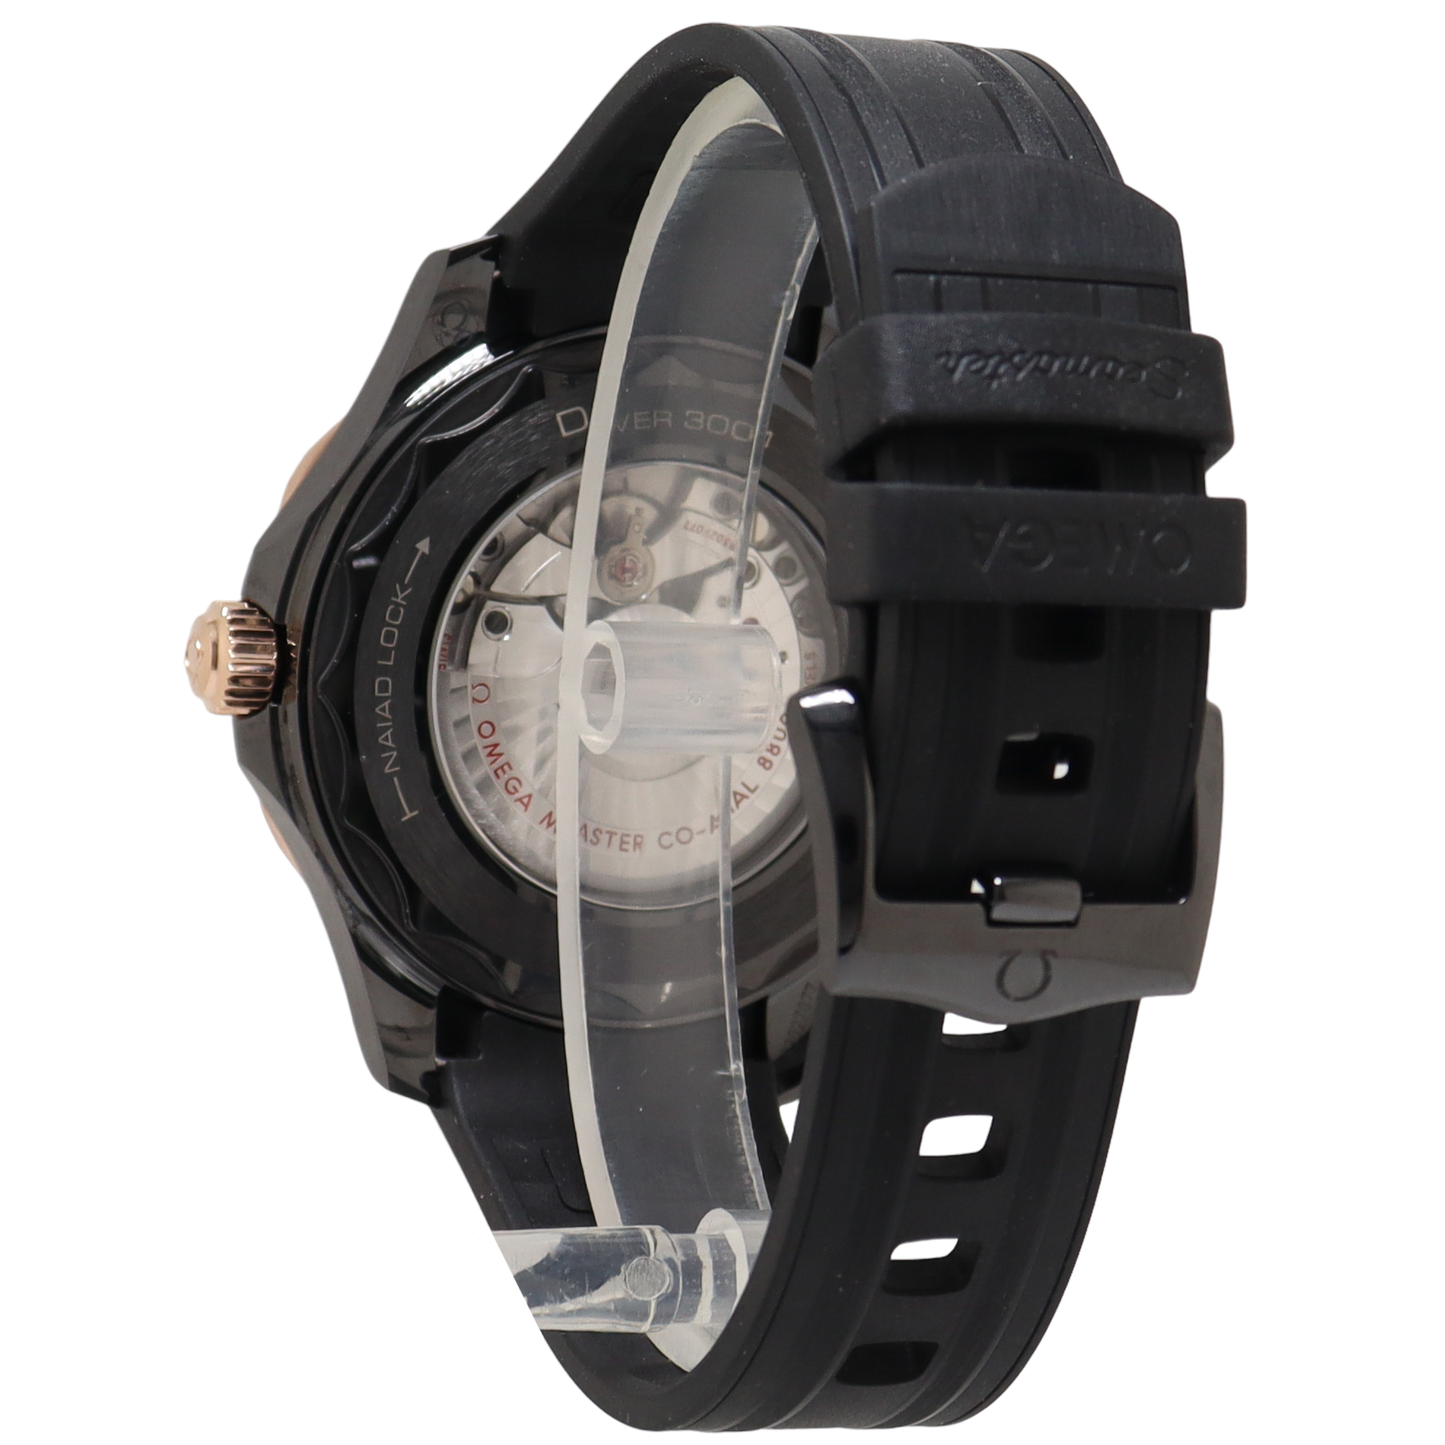 Omega Seamaster 43mm Black Ceramic Black Wave Dot Dial Watch Reference# 210.62.44.20.01.001 - Happy Jewelers Fine Jewelry Lifetime Warranty